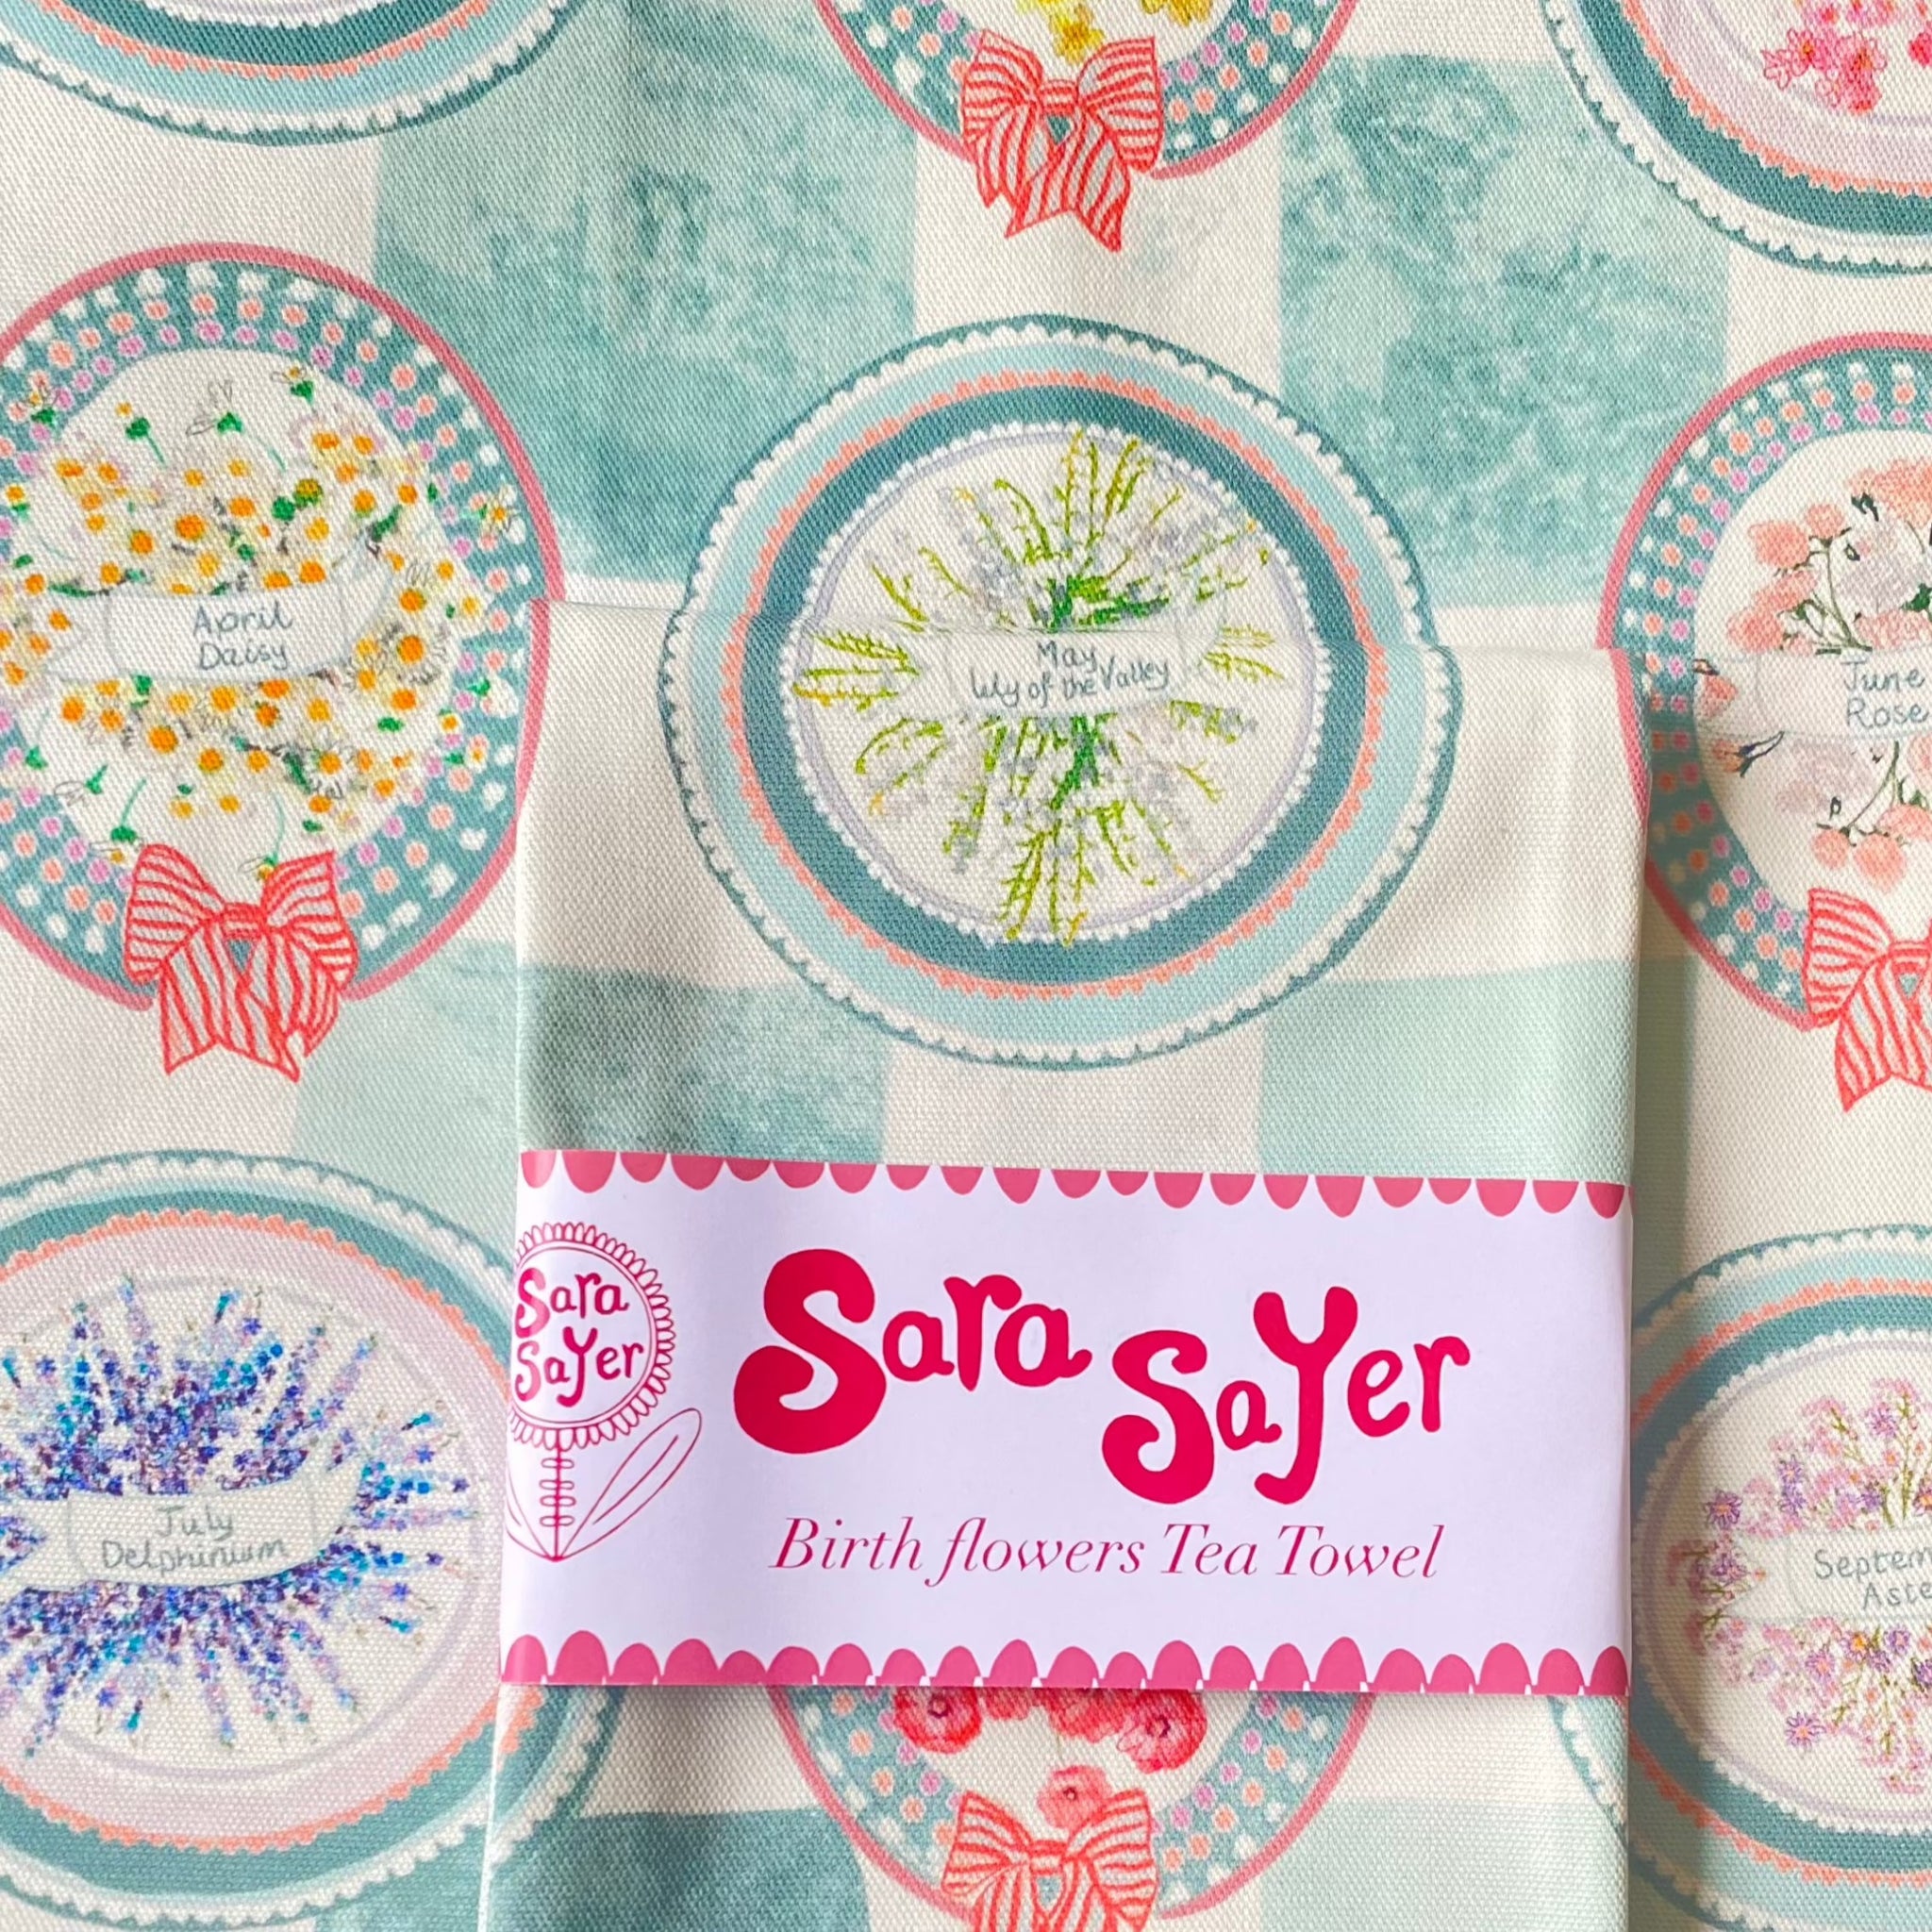 Birth Flowers Tea Towel by Sara Sayer